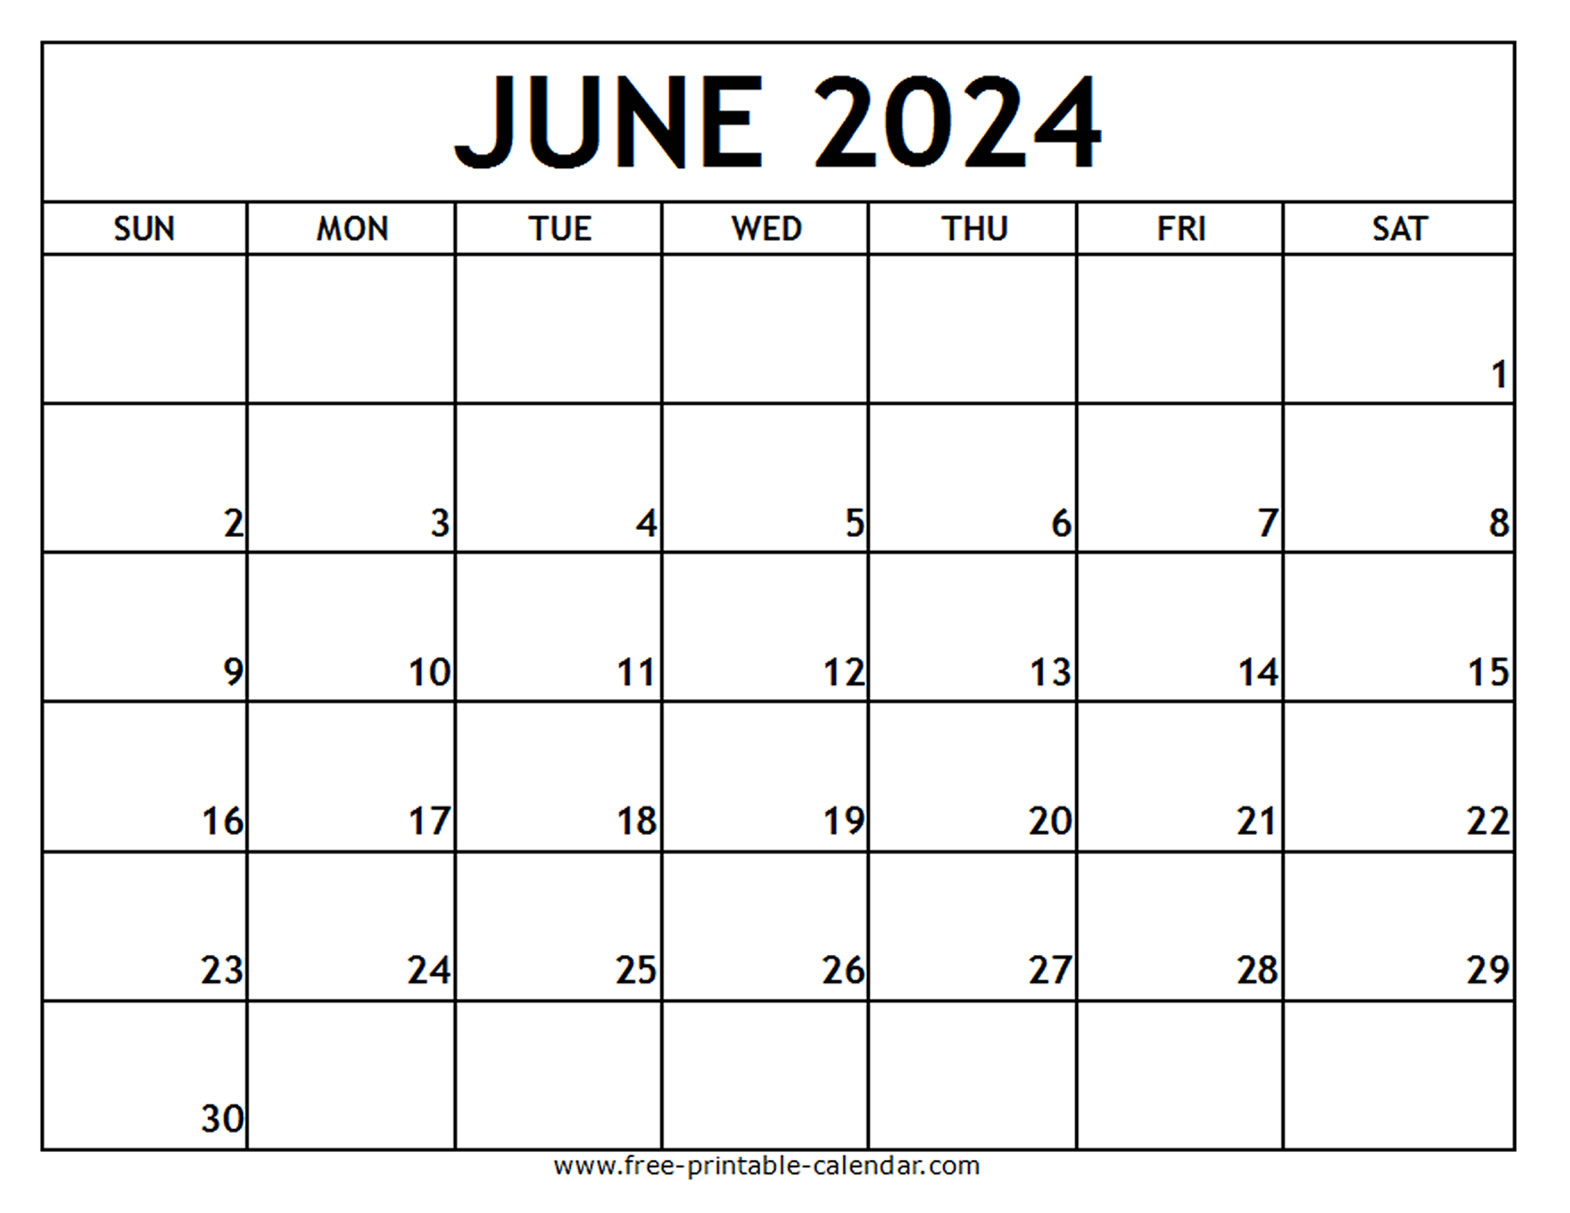 June 2024 Printable Calendar - Free-Printable-Calendar | Free Printable Calendar June July August 2024